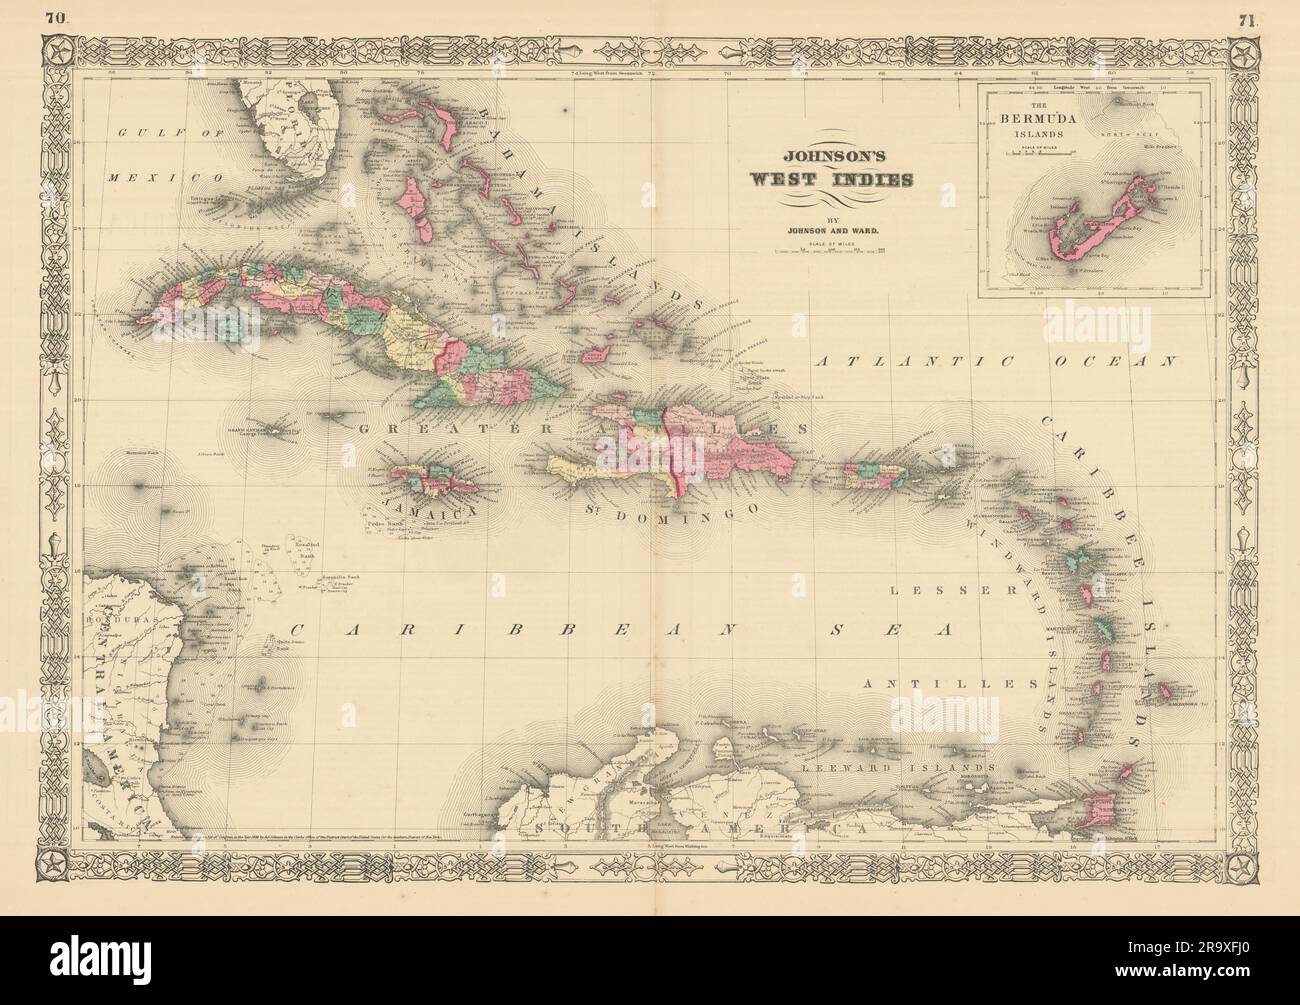 Johnson's West Indies. Isole Bermuda. Caraibi Bahamas Antilles 1866 mappa Foto Stock